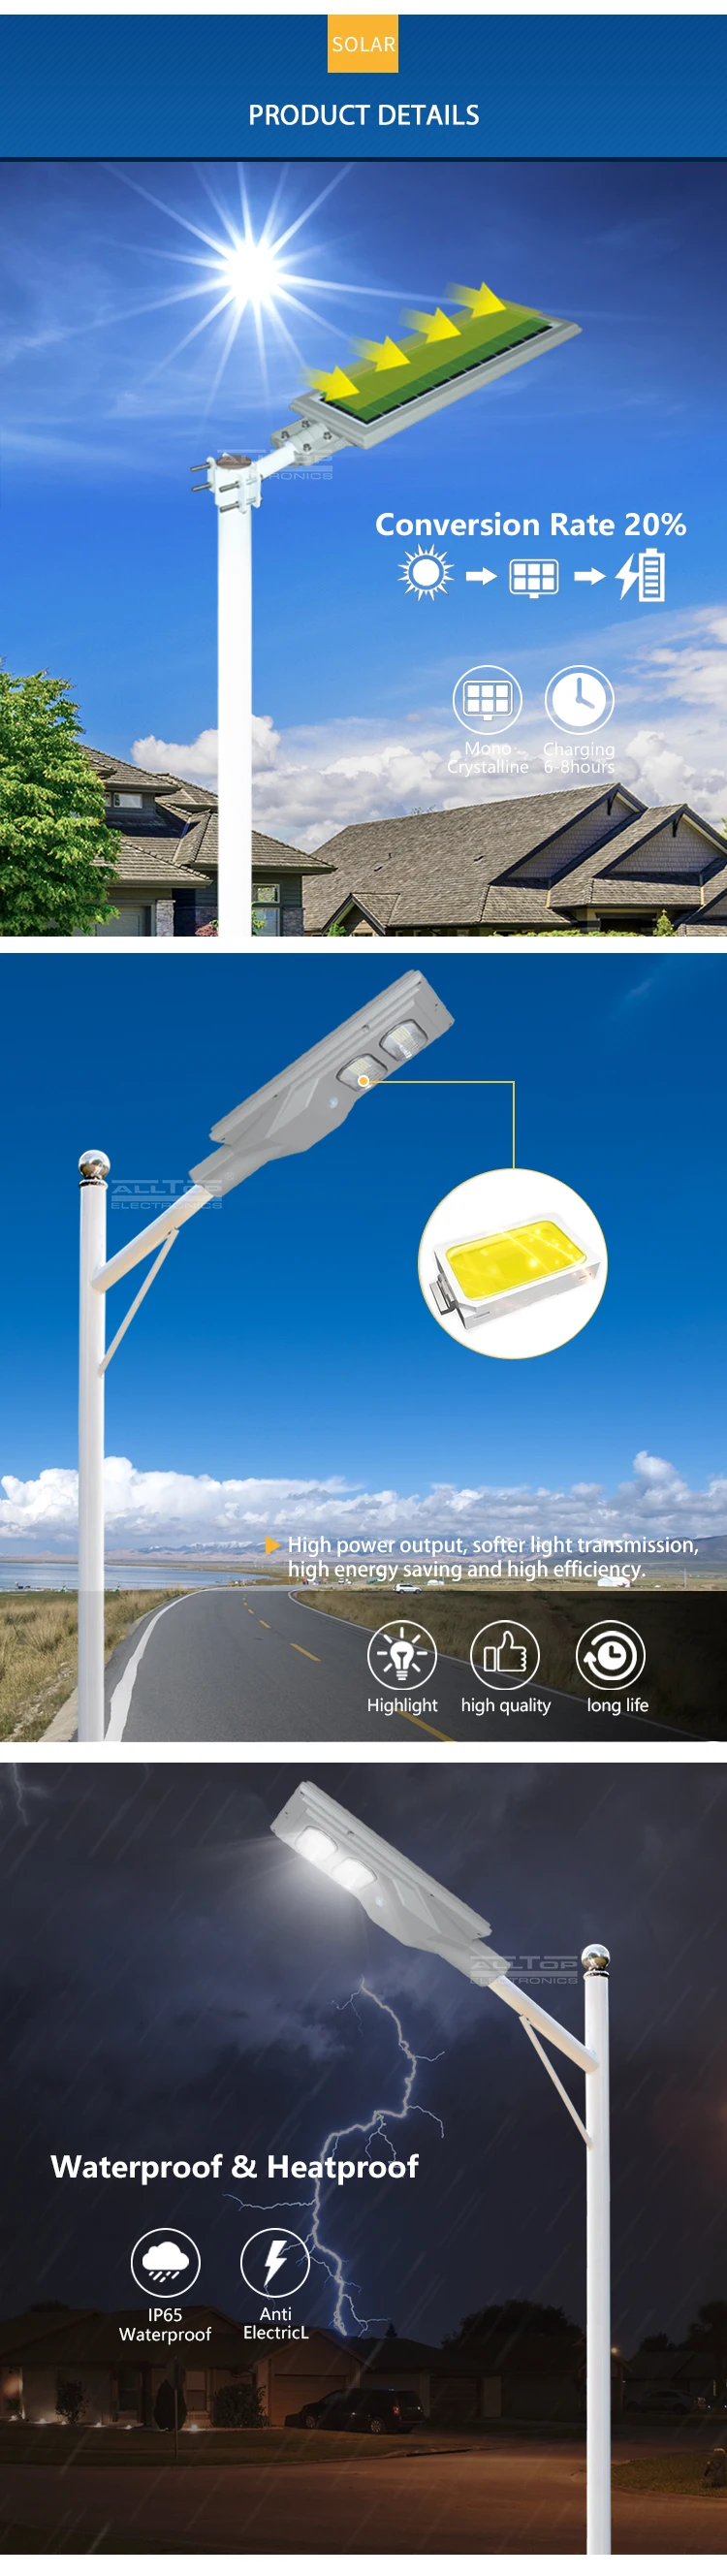 ALLTOP CE approve high quality solar power 30w 60w 90w 120w 150w all in one led solar street light